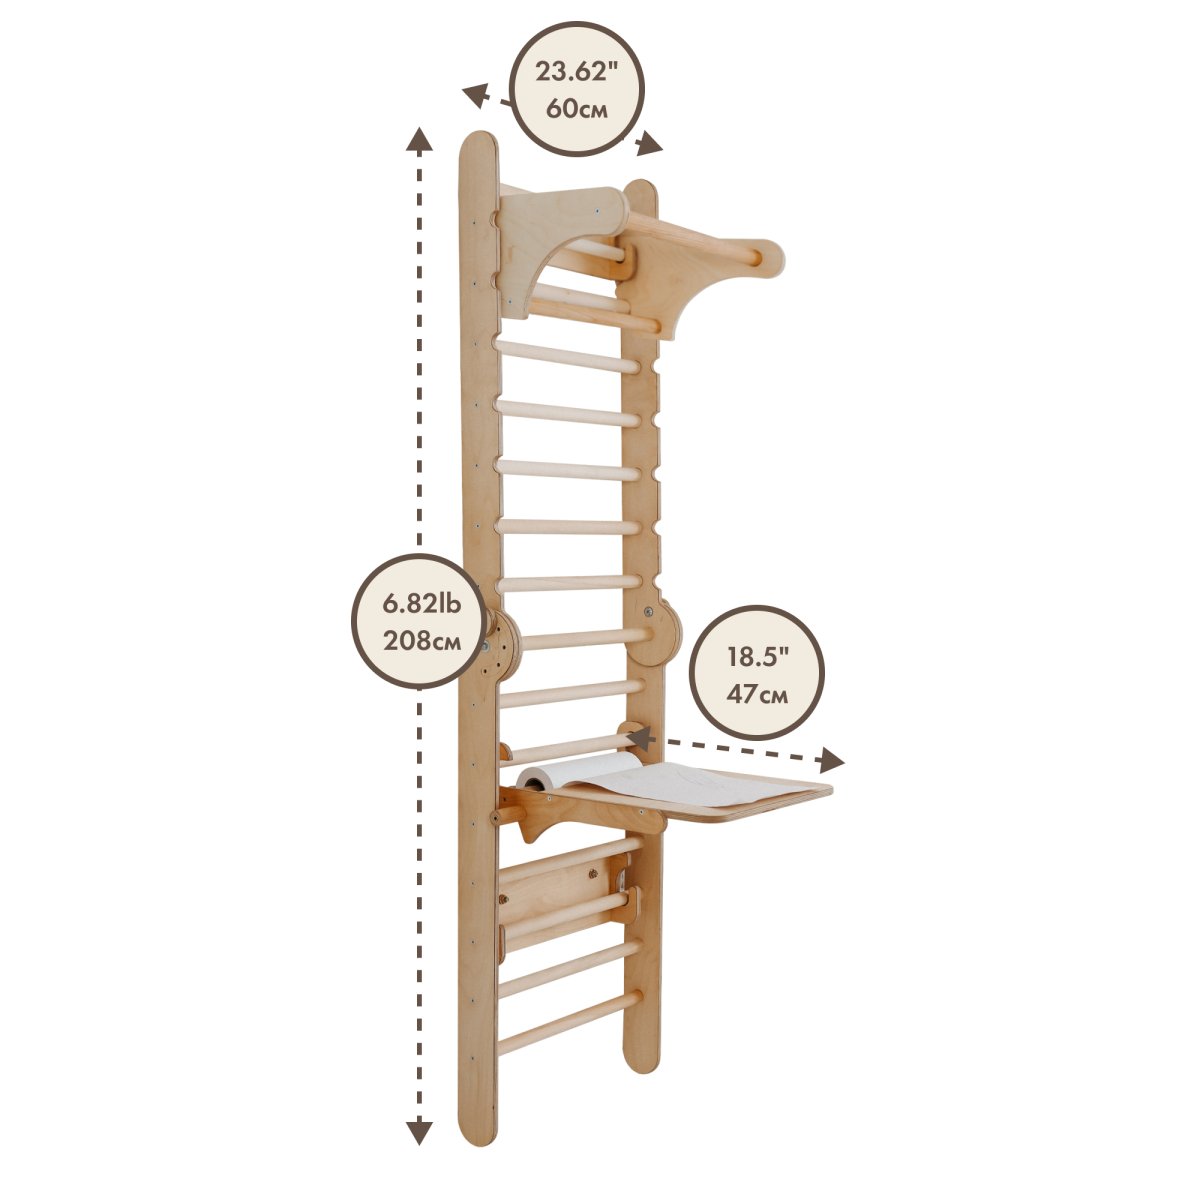 5in1: Wooden Swedish Wall / Climbing ladder for Children + Swing Set + Slide Board + Art Add-on - Goodevas